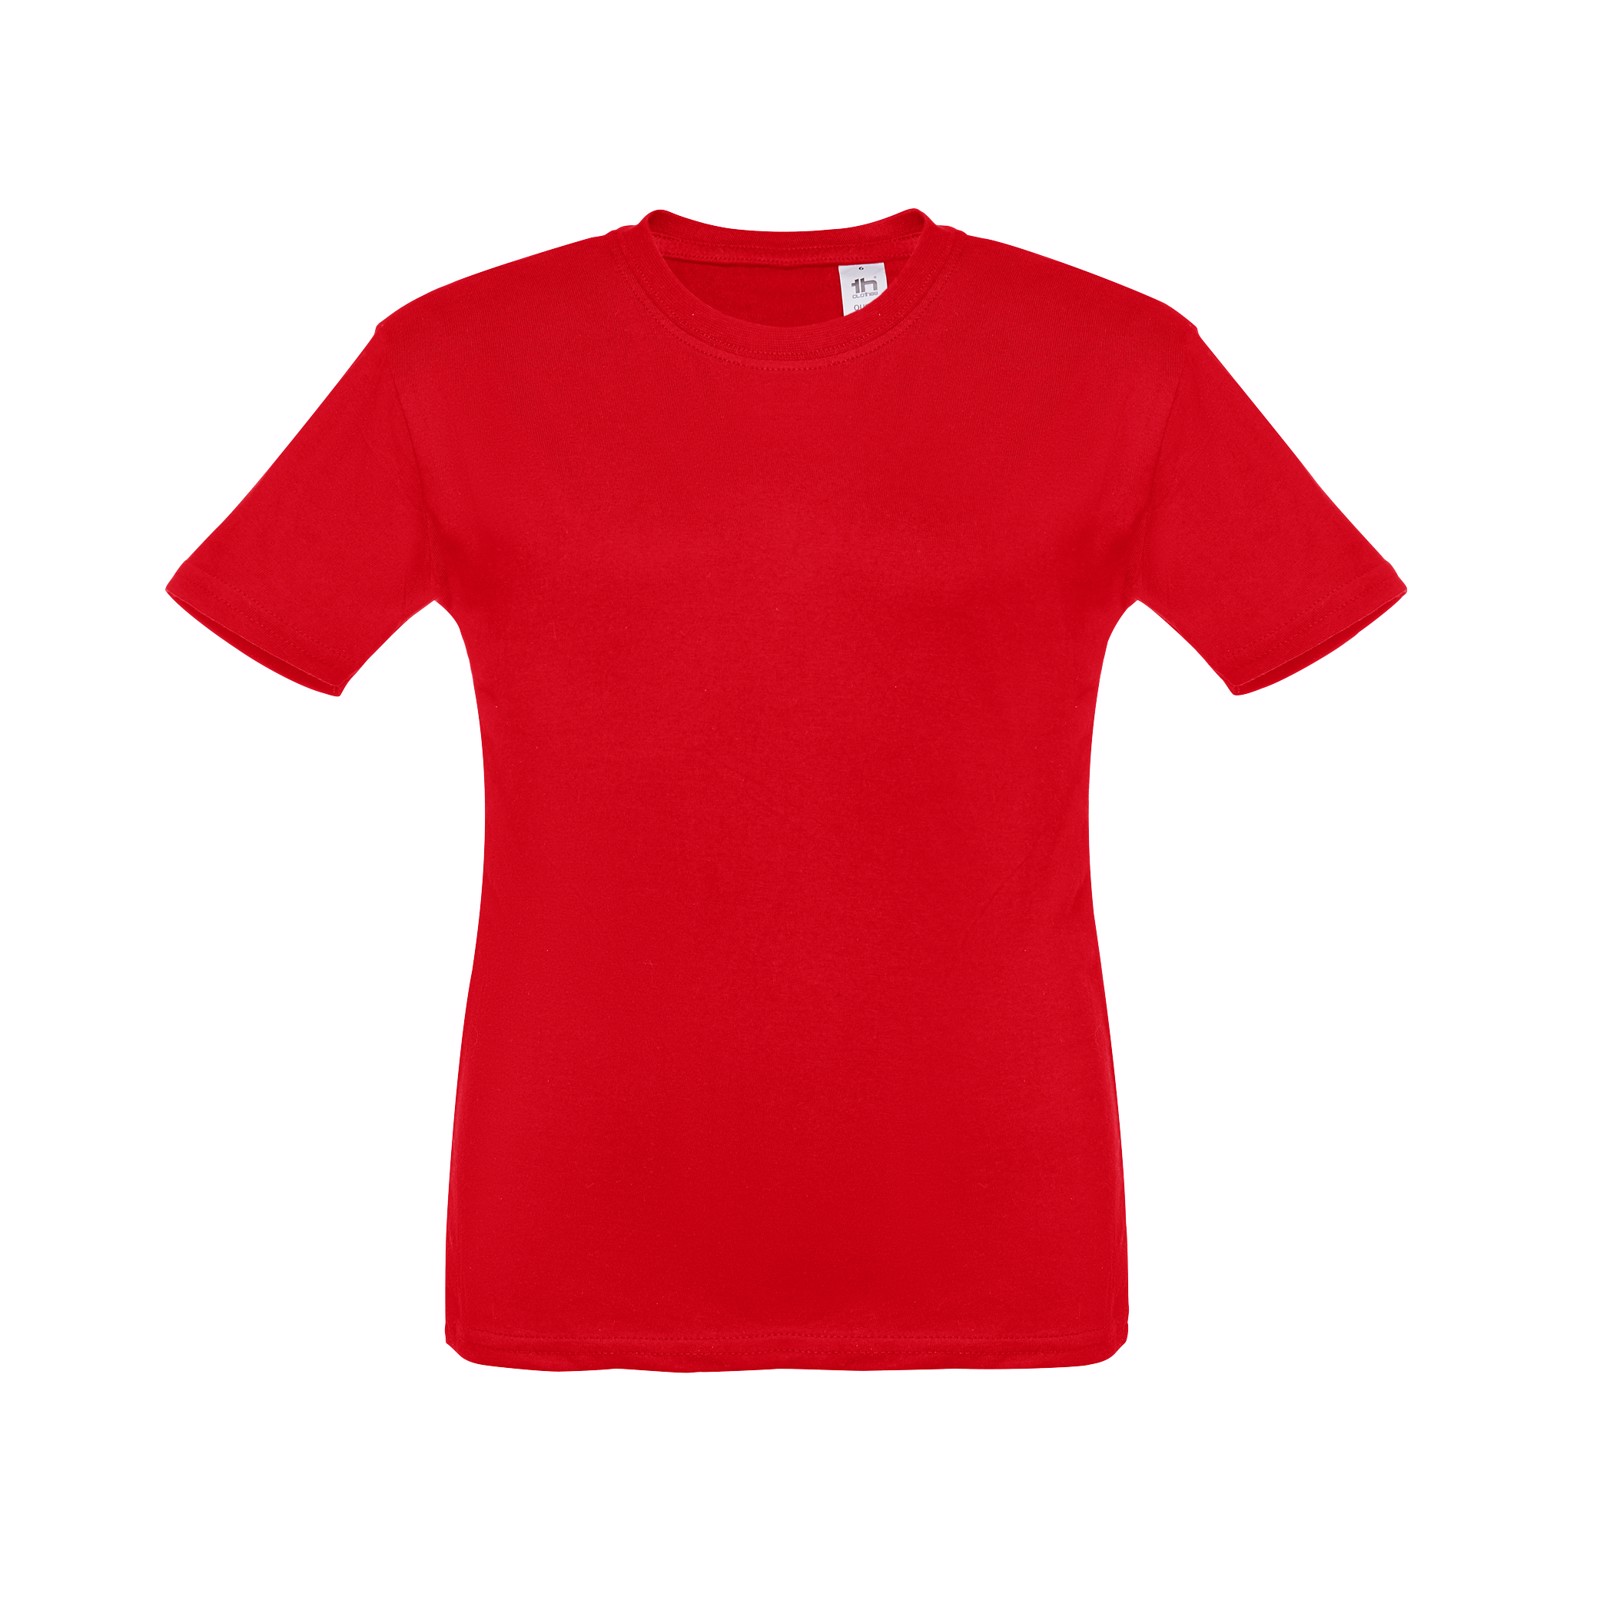 THC ANKARA KIDS. Children's t-shirt - Red / 8